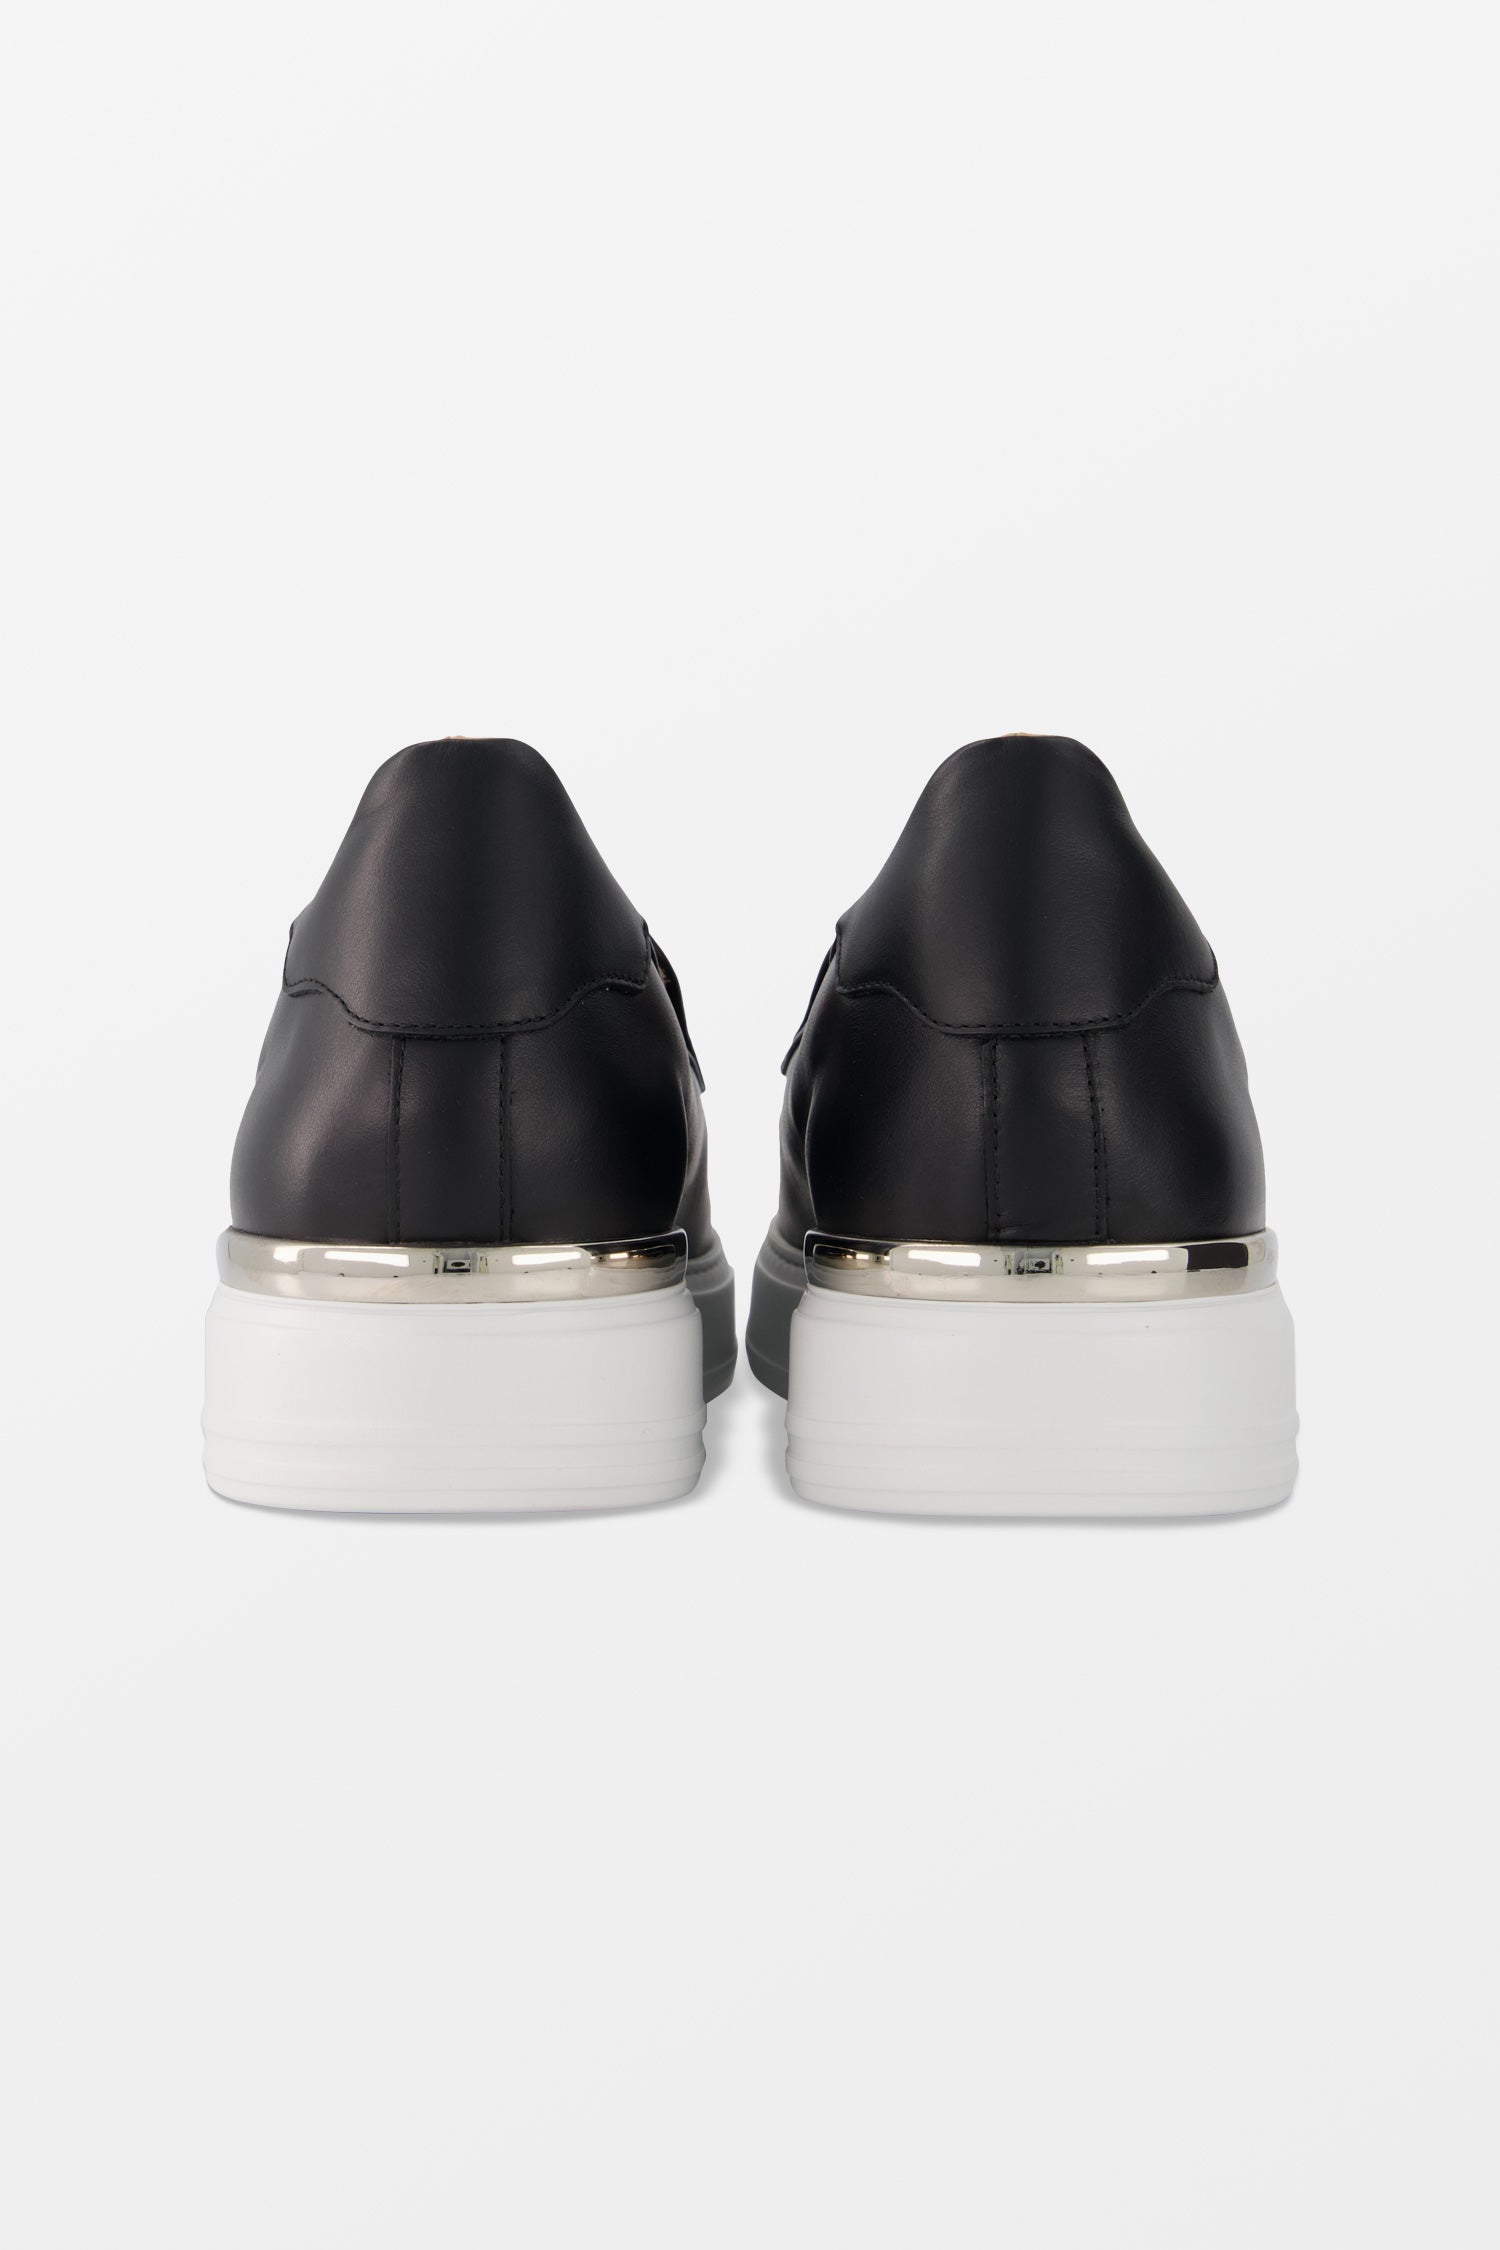 Philipp Plein Hexagon Slip-Ons Black Sneakers